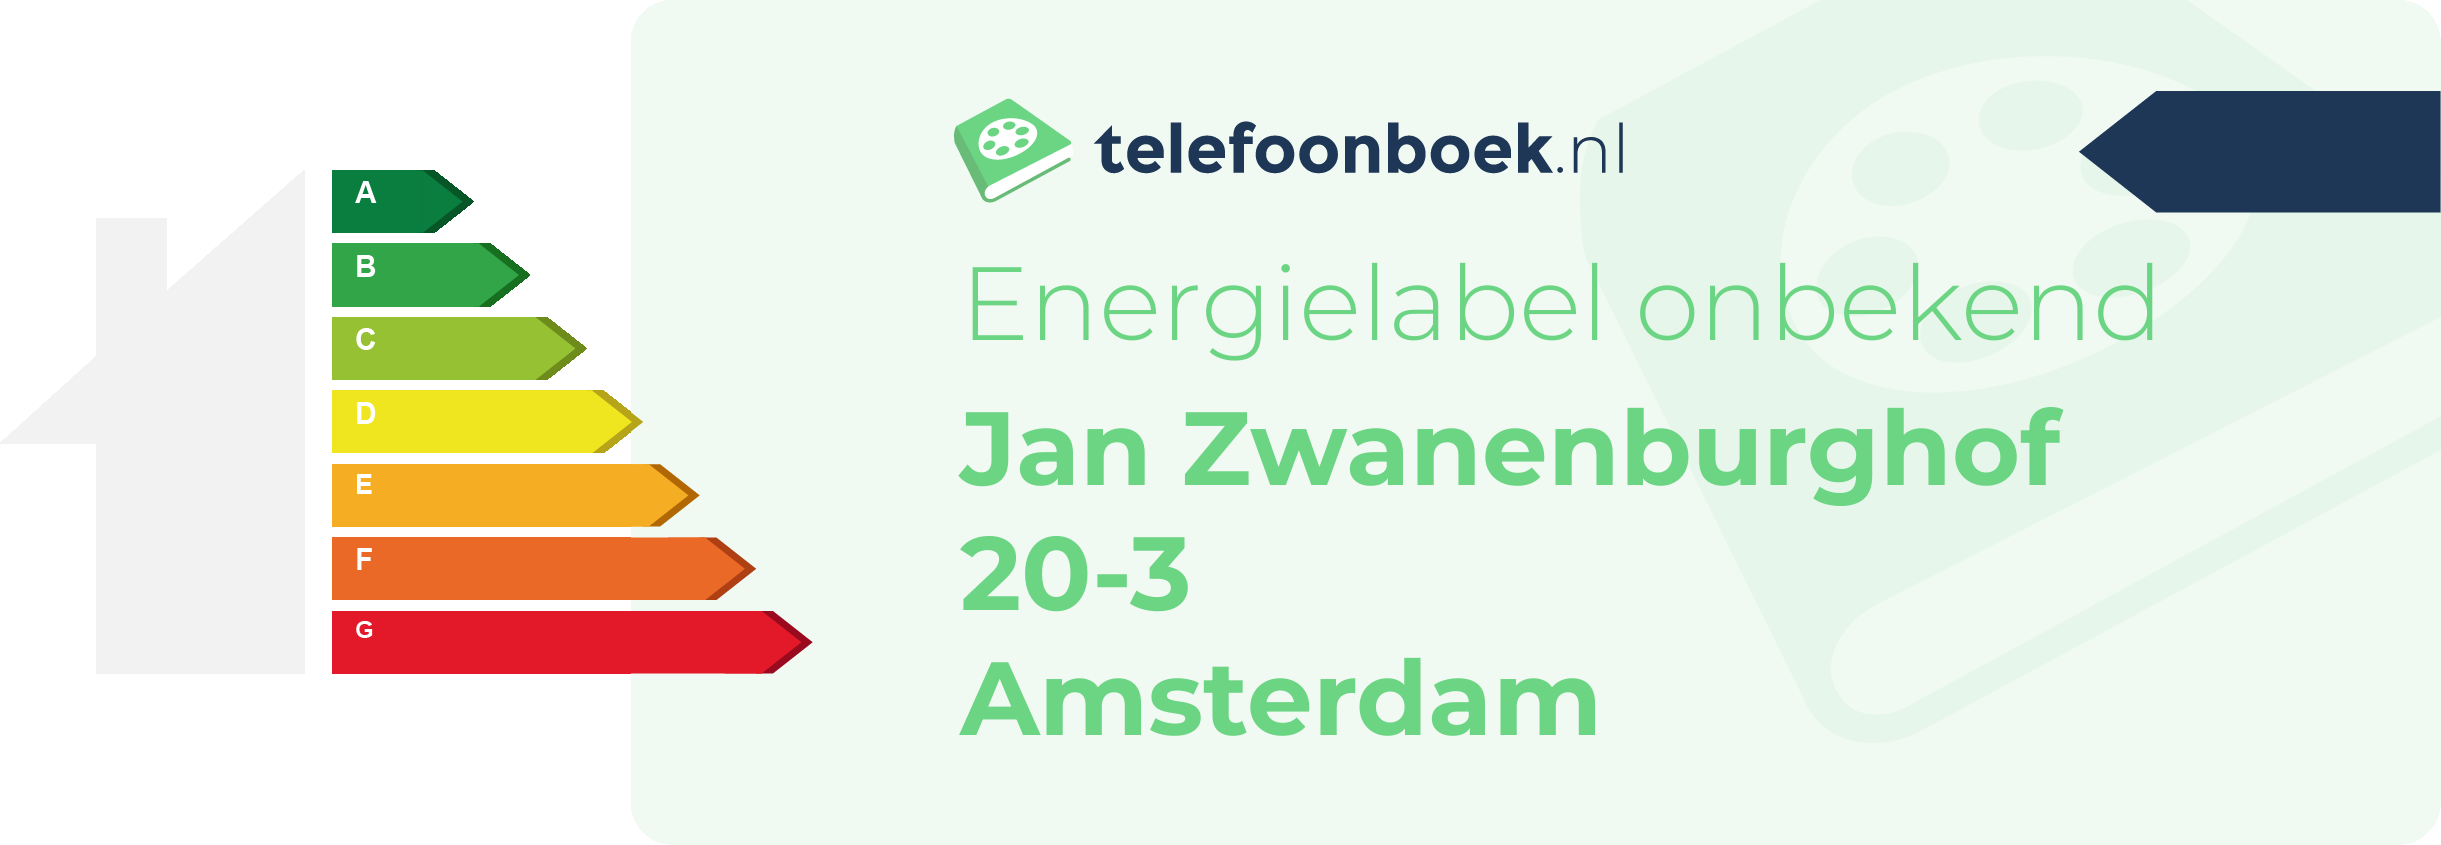 Energielabel Jan Zwanenburghof 20-3 Amsterdam